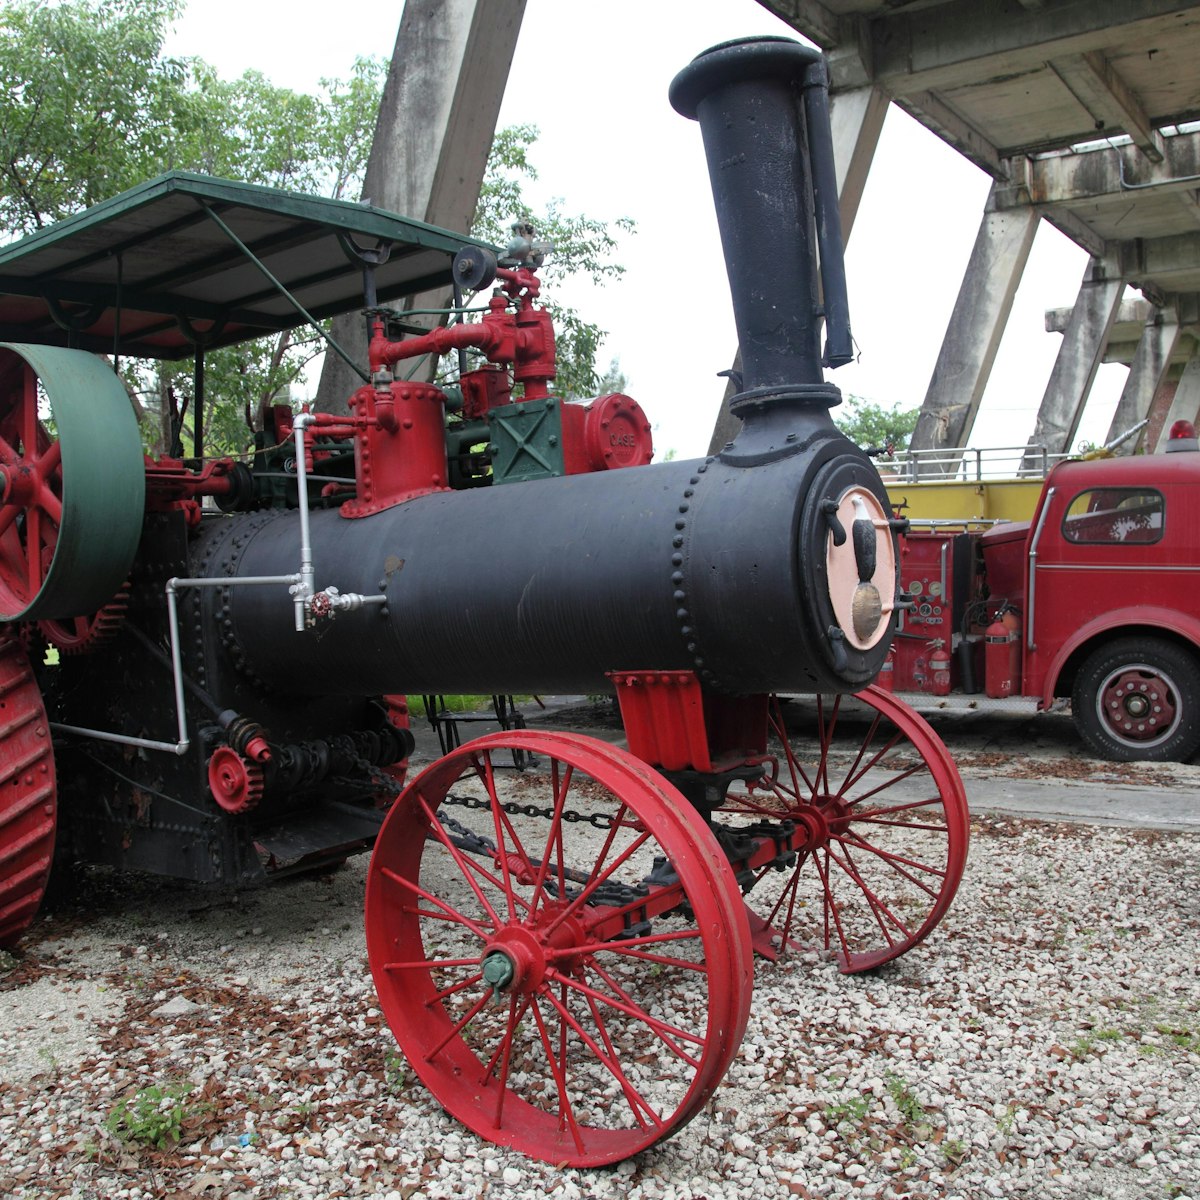 EB94BY Gold Coast Railroad Museum, Miami, Florida, USA